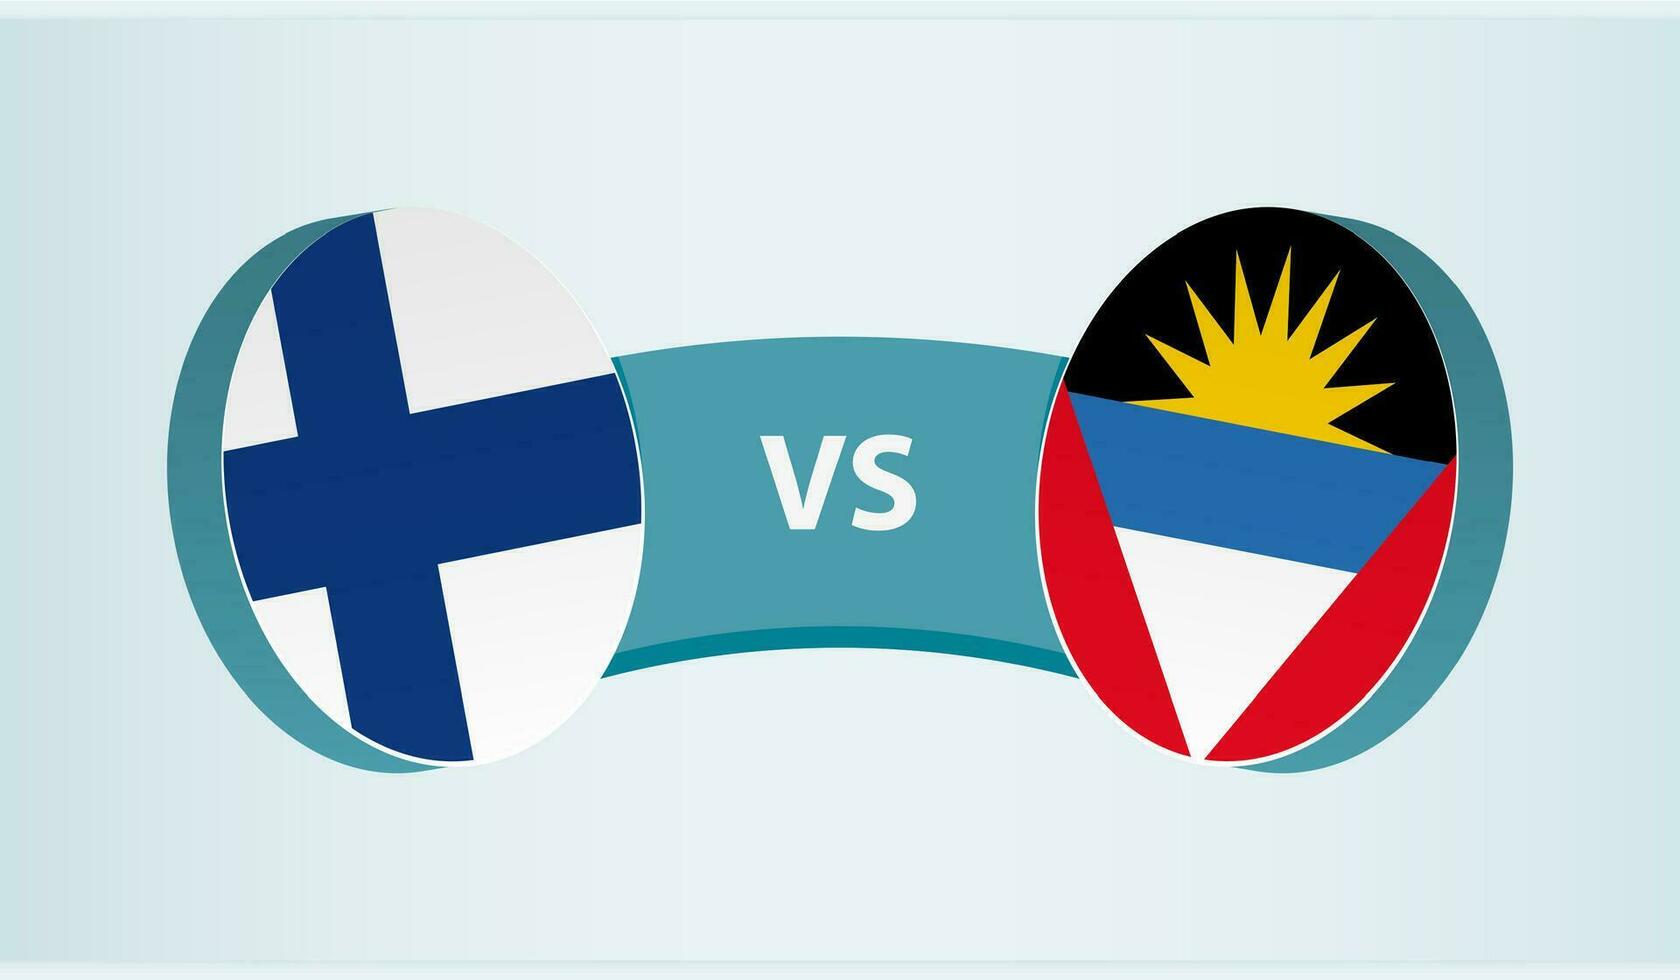 Finland versus Antigua and Barbuda, team sports competition concept. vector